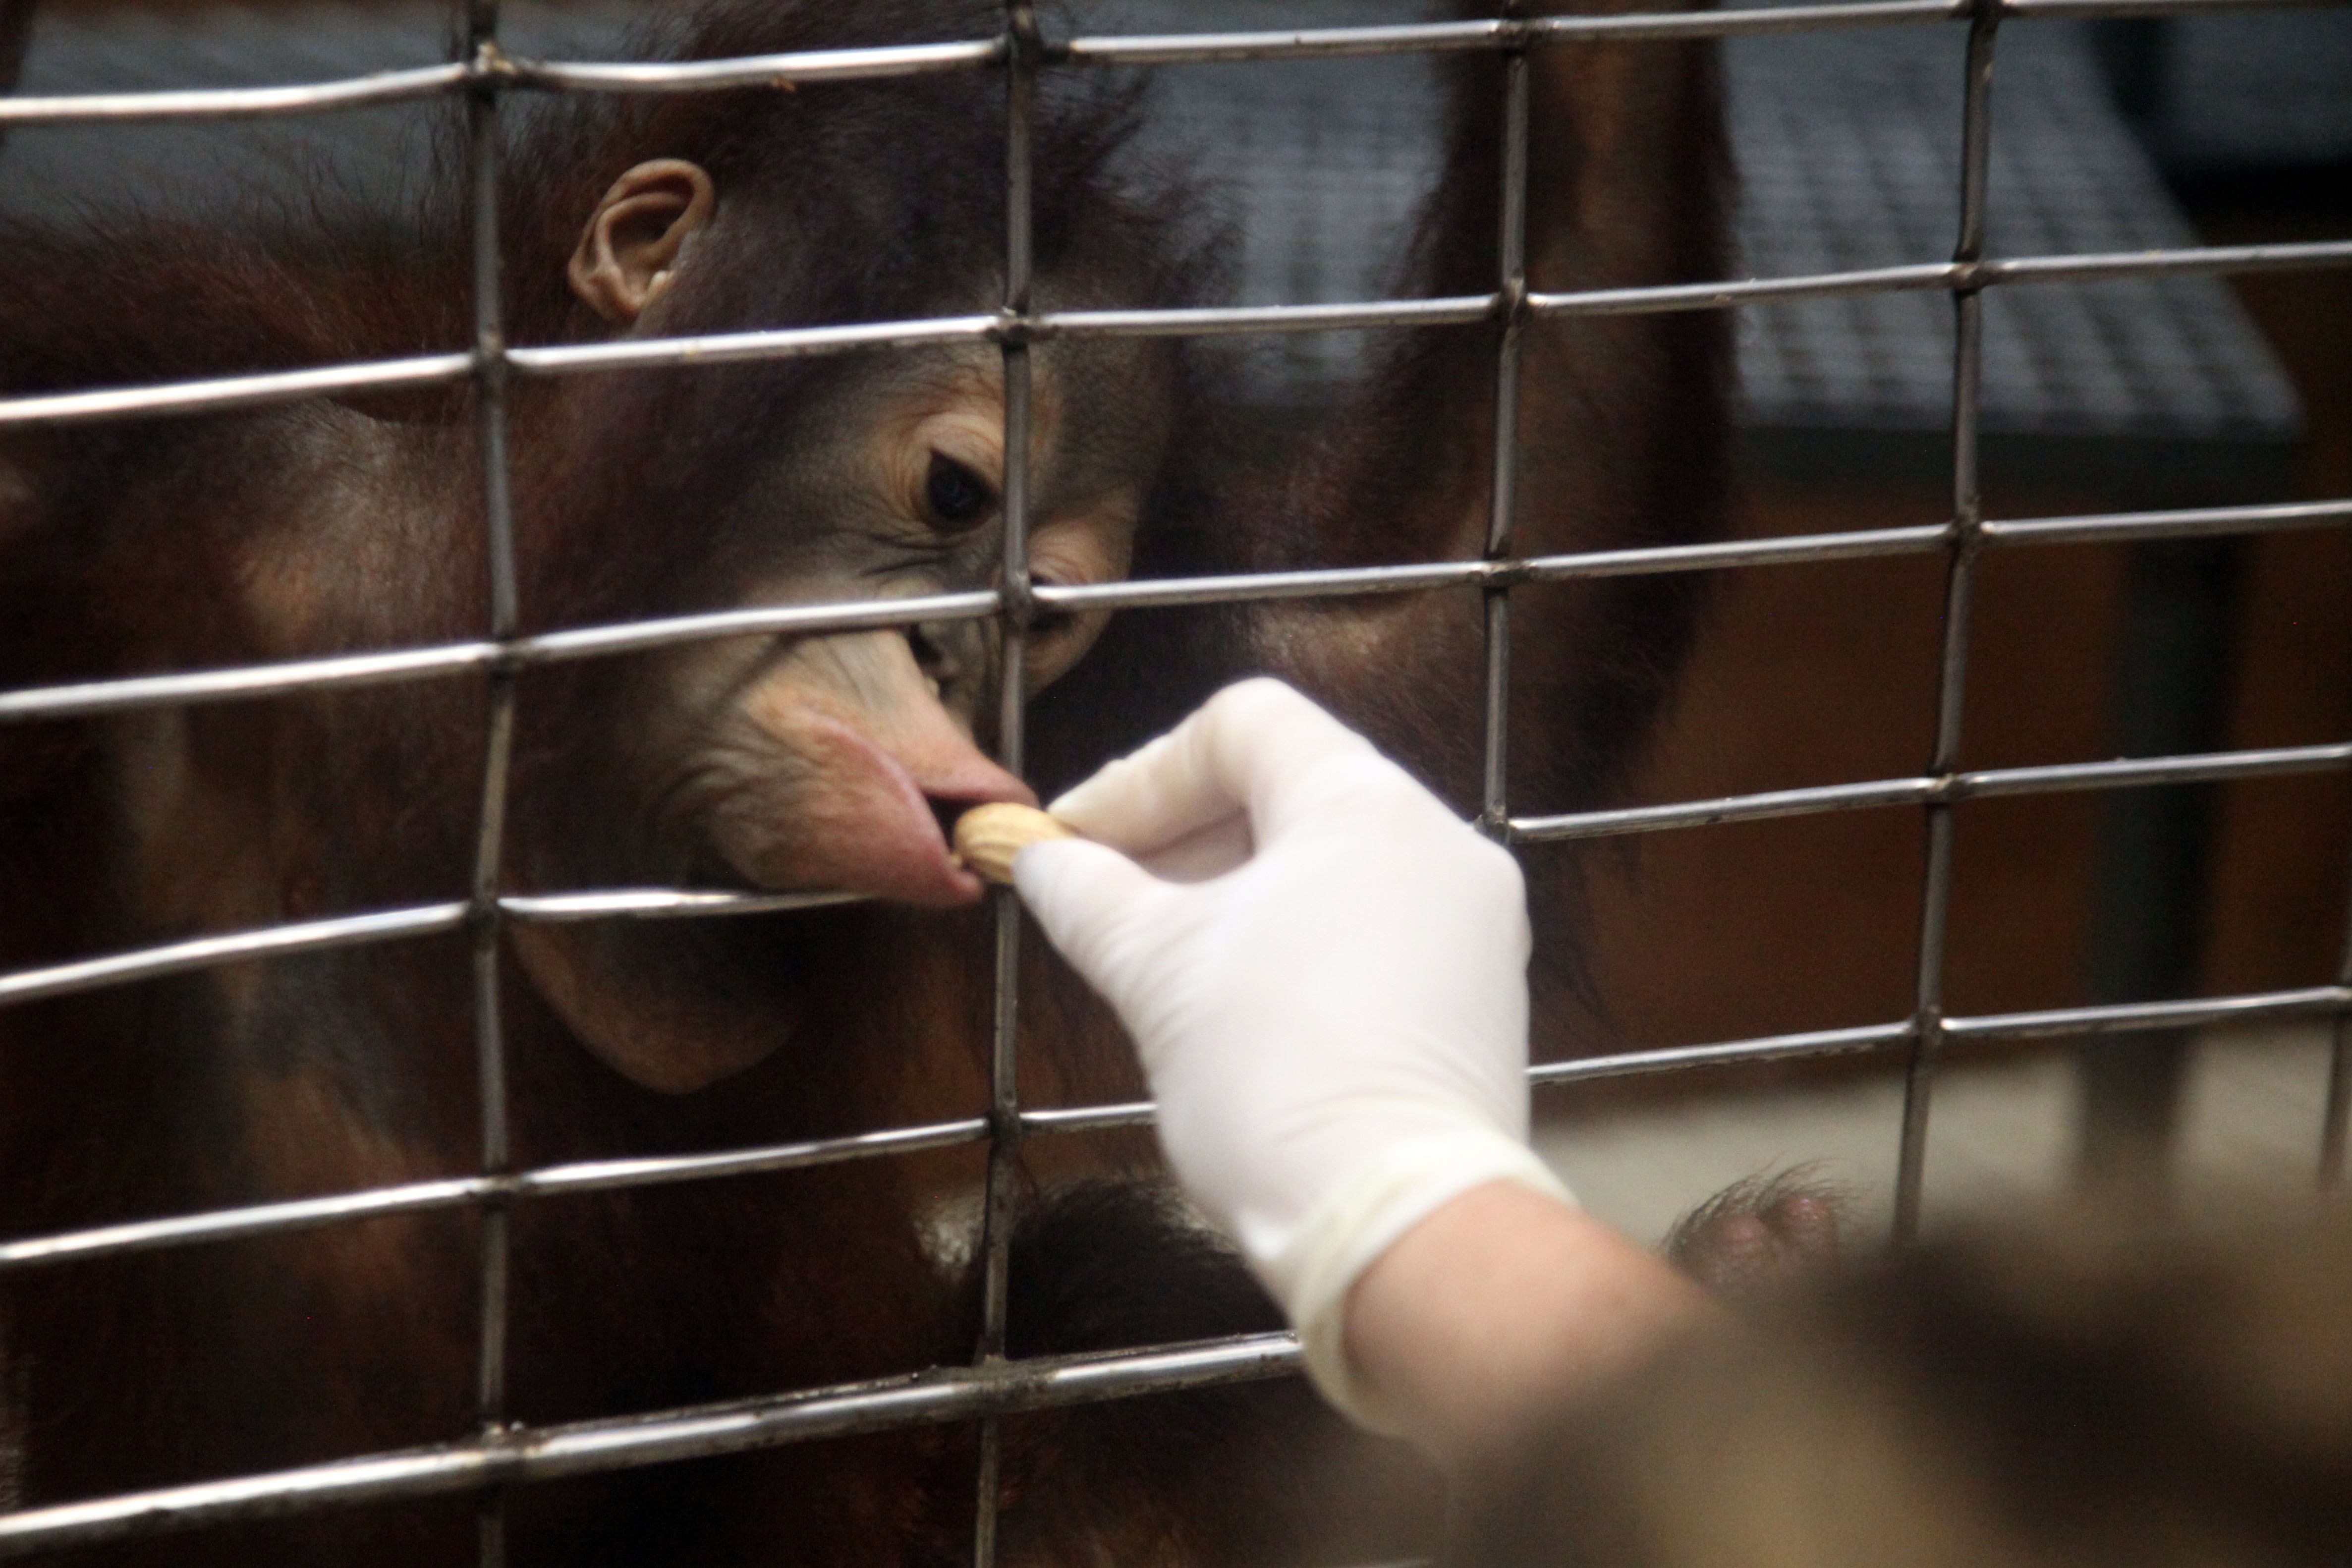 close up of an orangutan getting a peanut